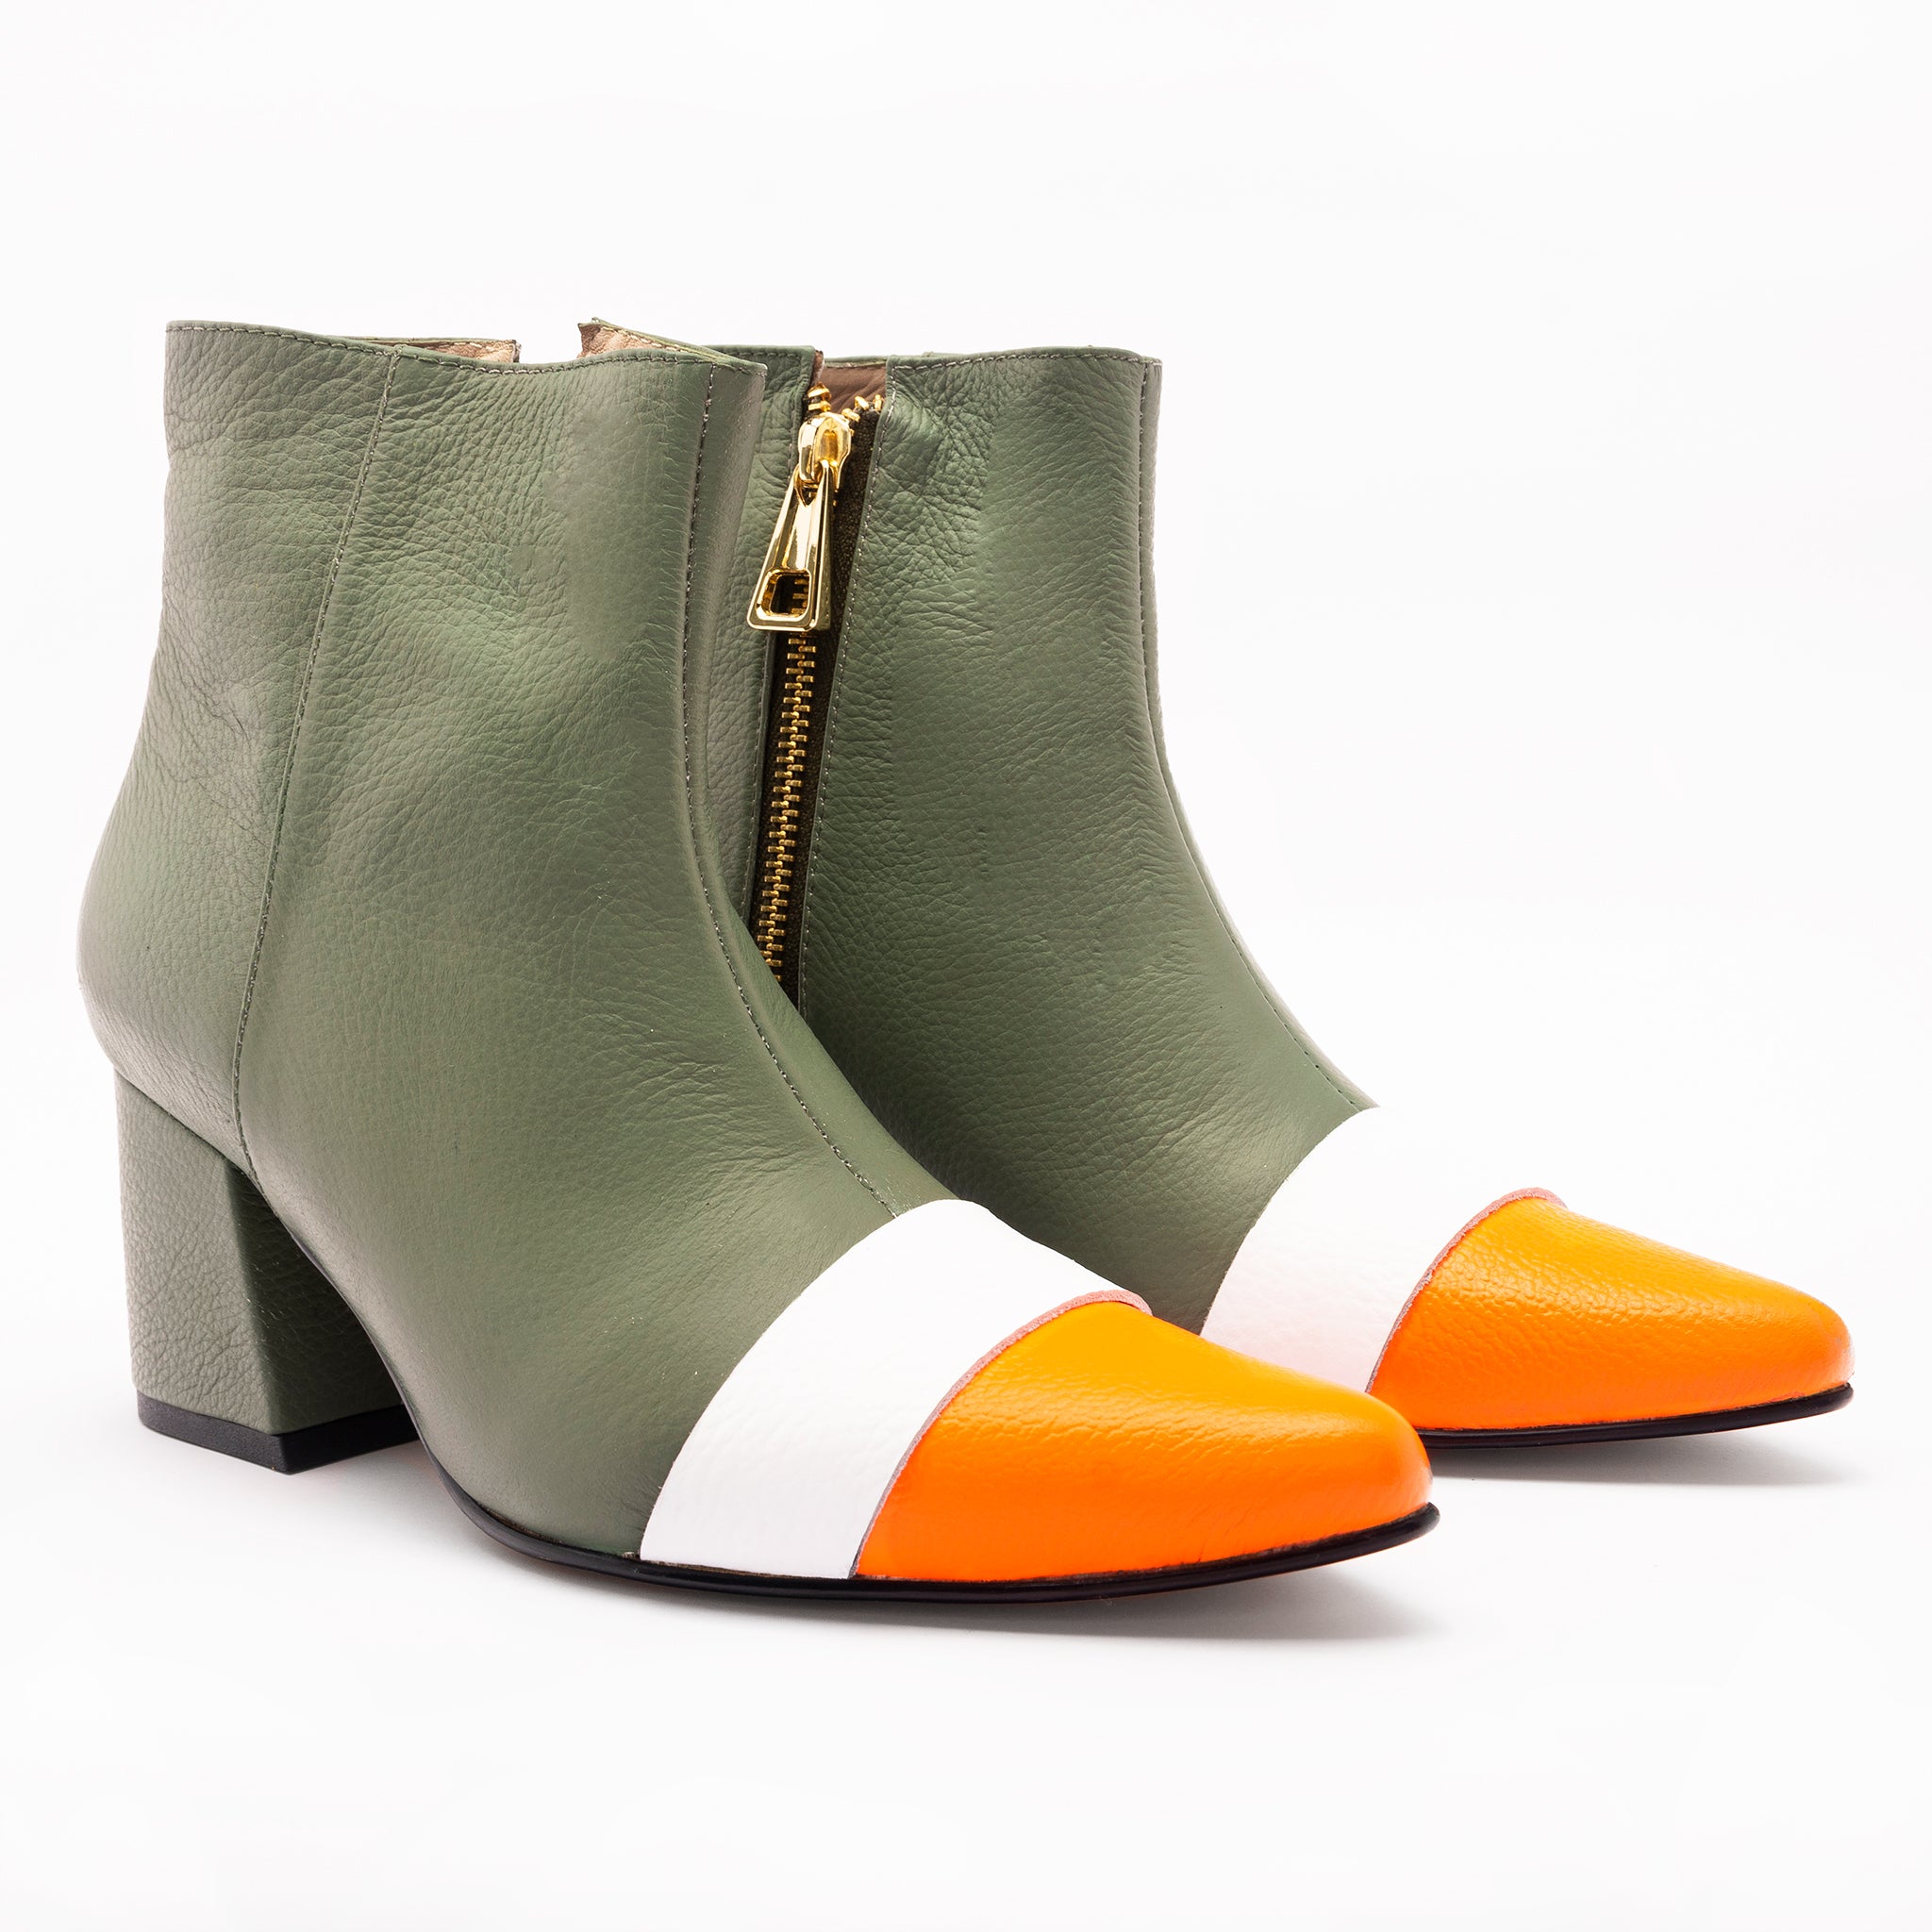 ANKLE boots - SALVIA + naranja NEÓN + blanco -